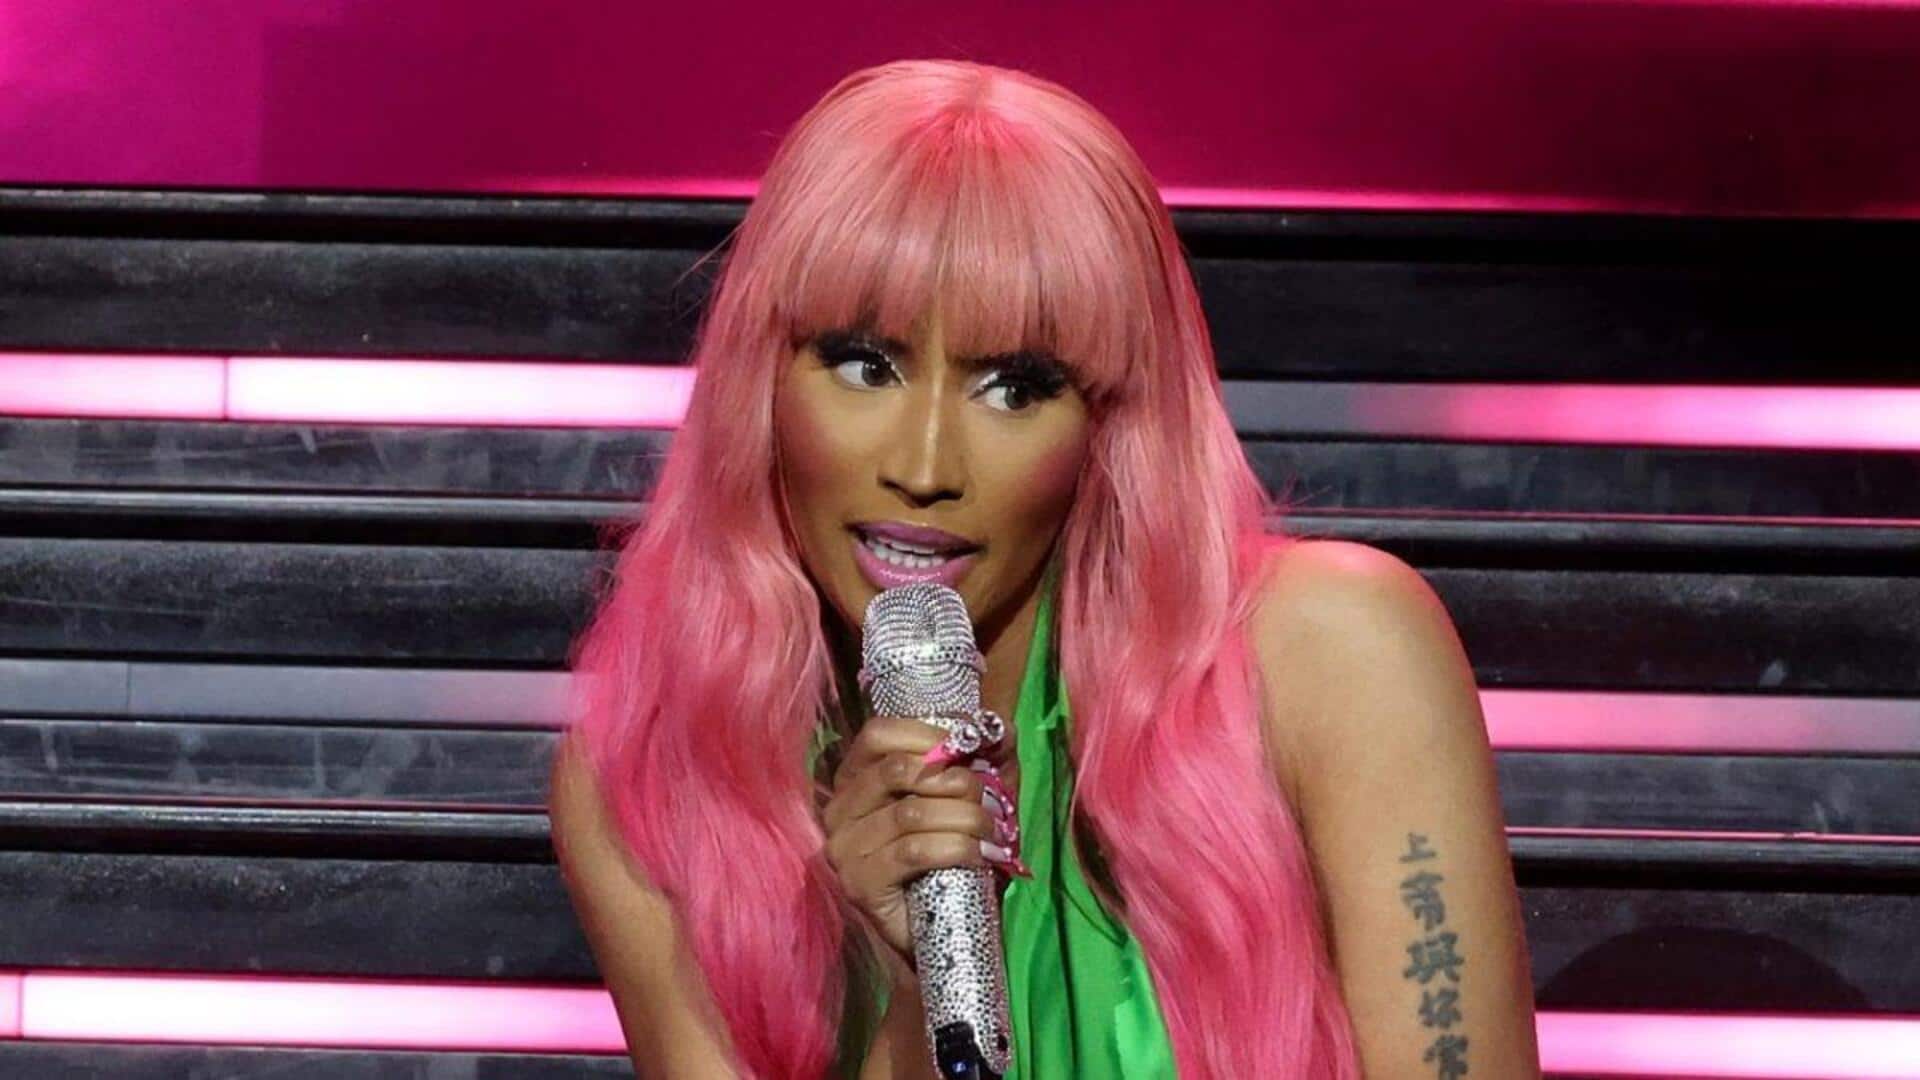 Nicki Minaj's concert canceled following arrest for possessing 'soft drugs'